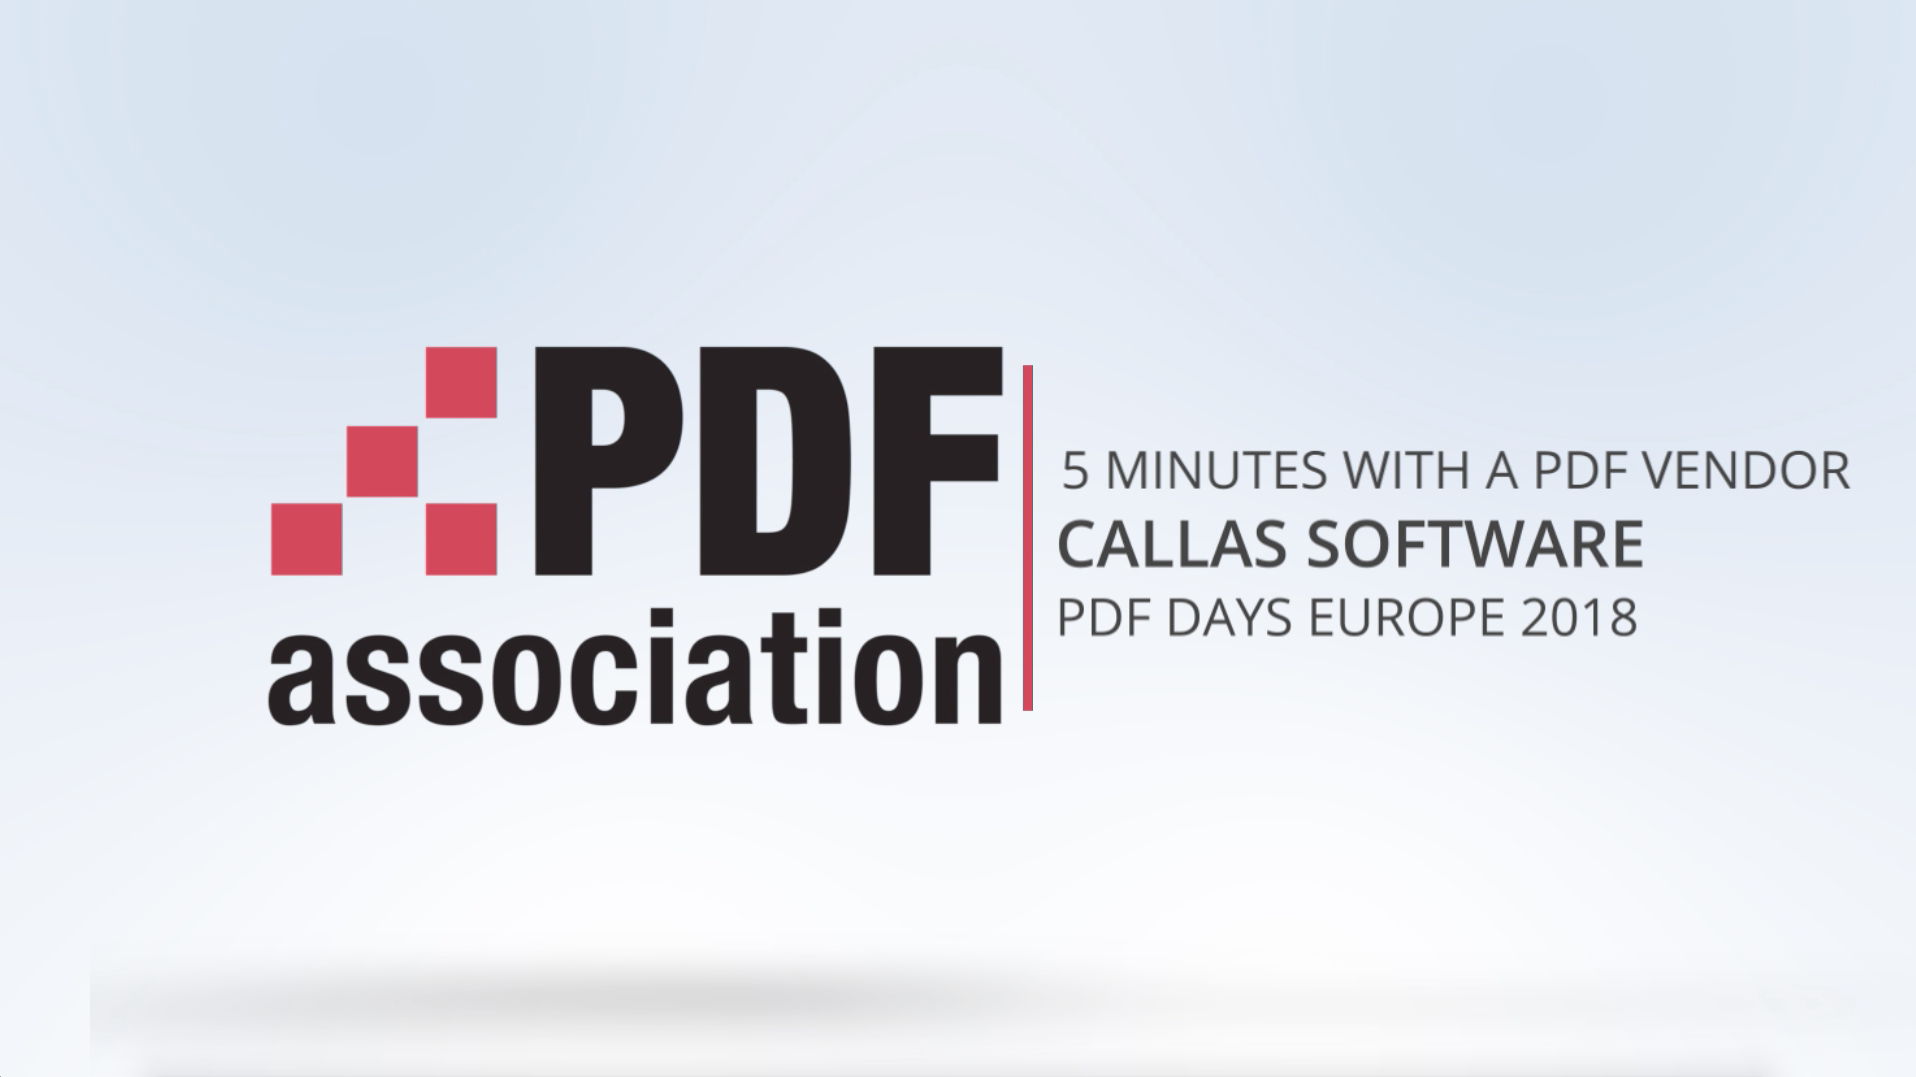 Presentation - Save data with pdfaPilot!